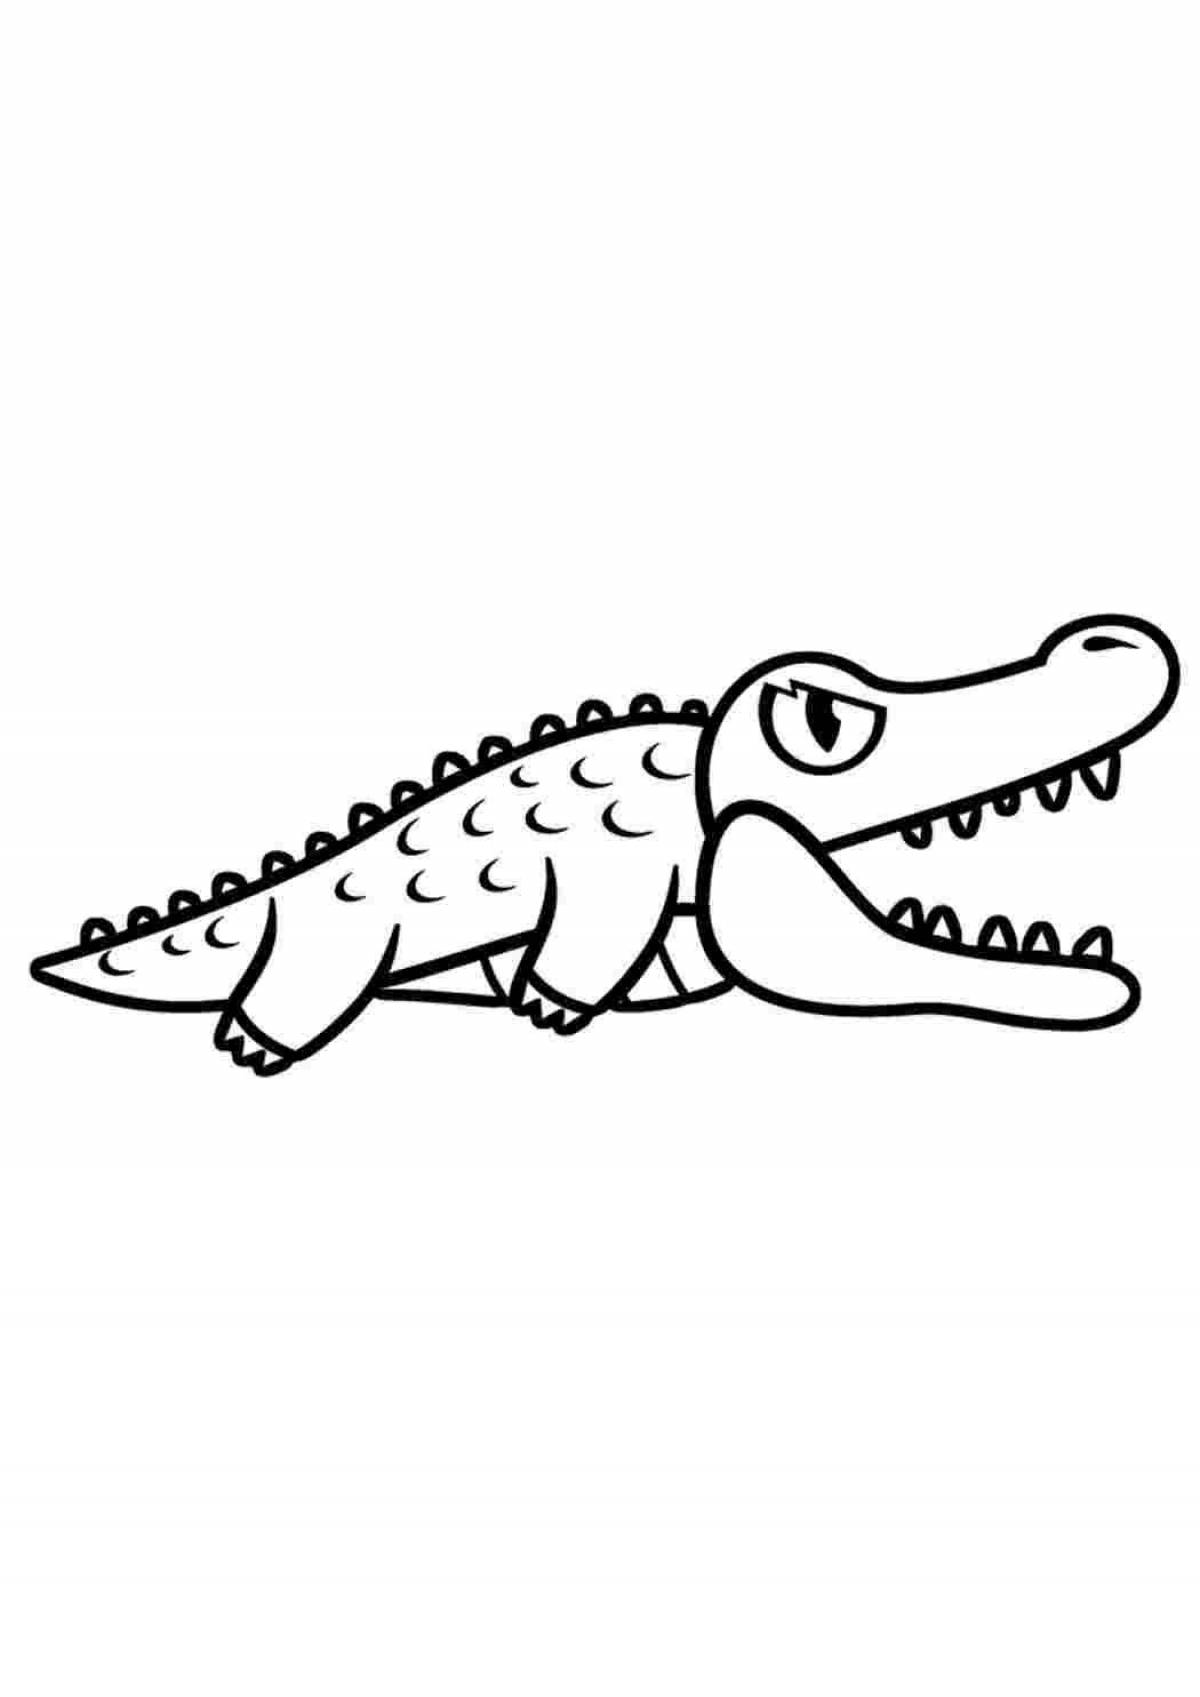 Adorable crocodile drawing for kids